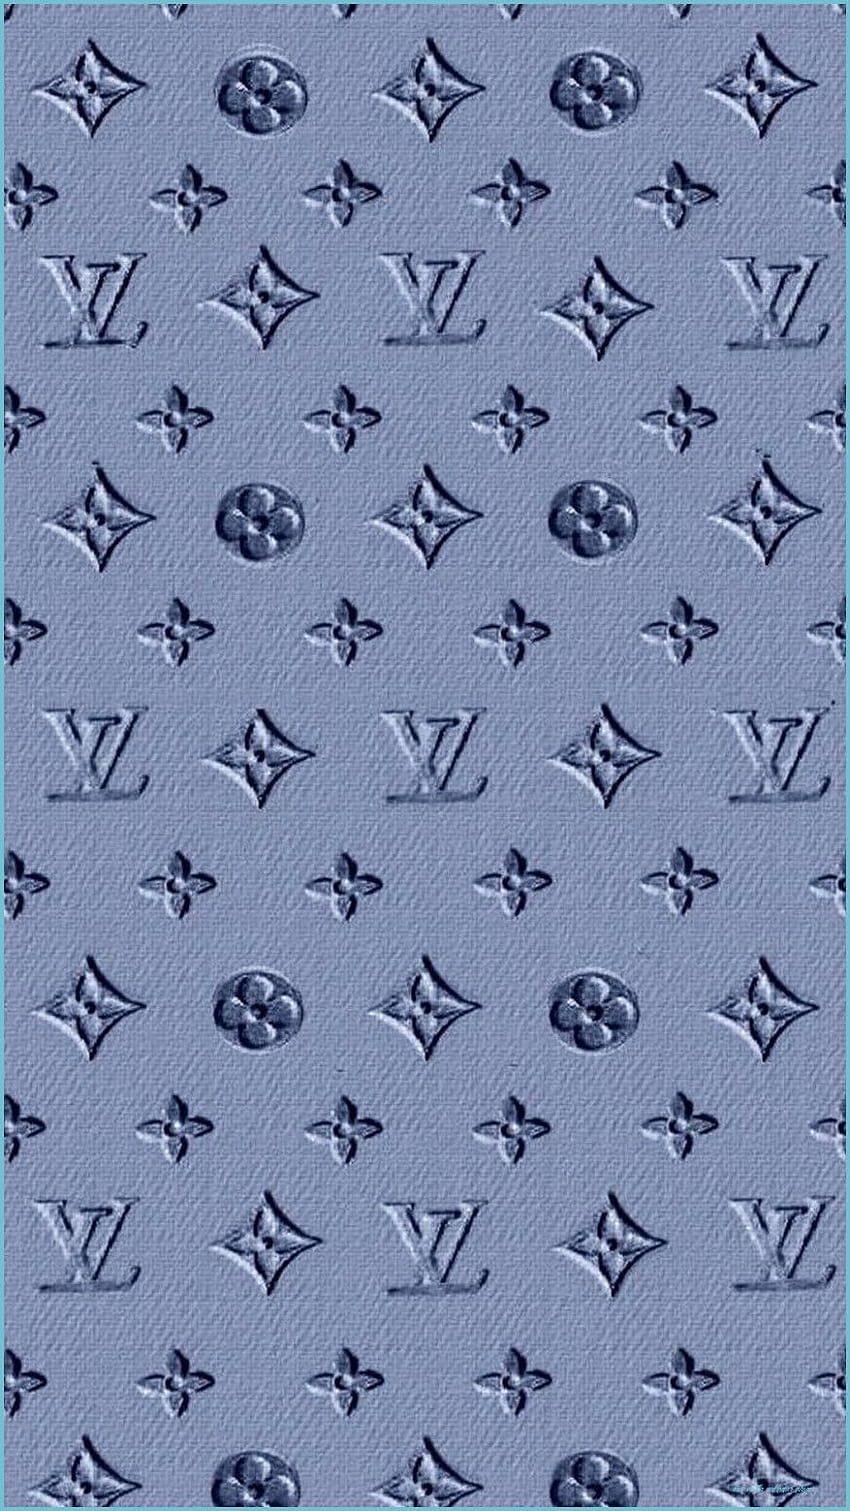 New Louis Vuitton Logo  Louis vuitton iphone wallpaper, Iphone